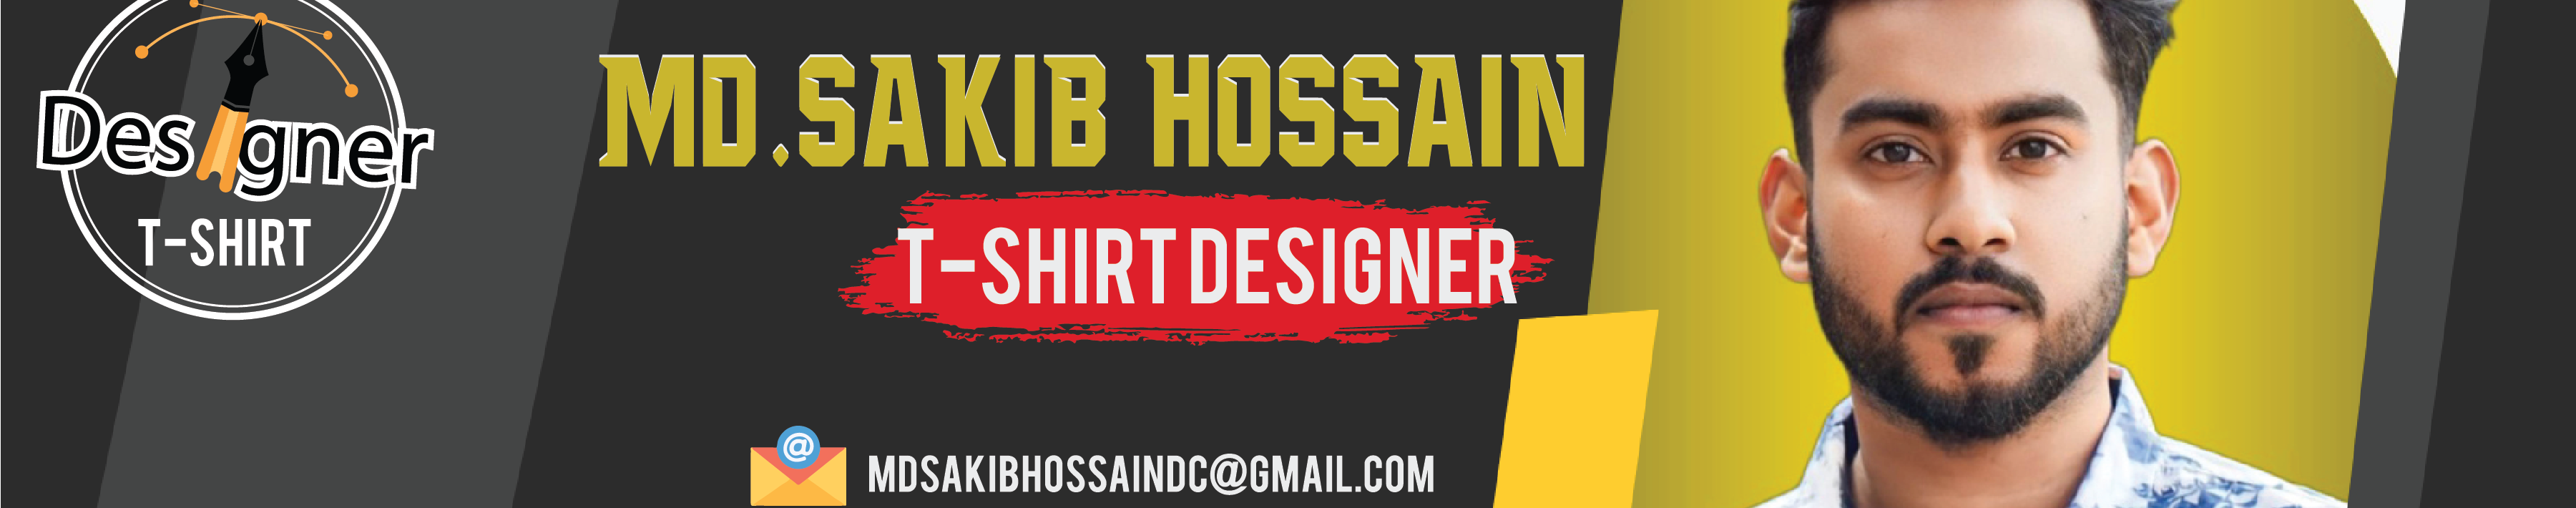 SAKIB HOSSAIN's profile banner